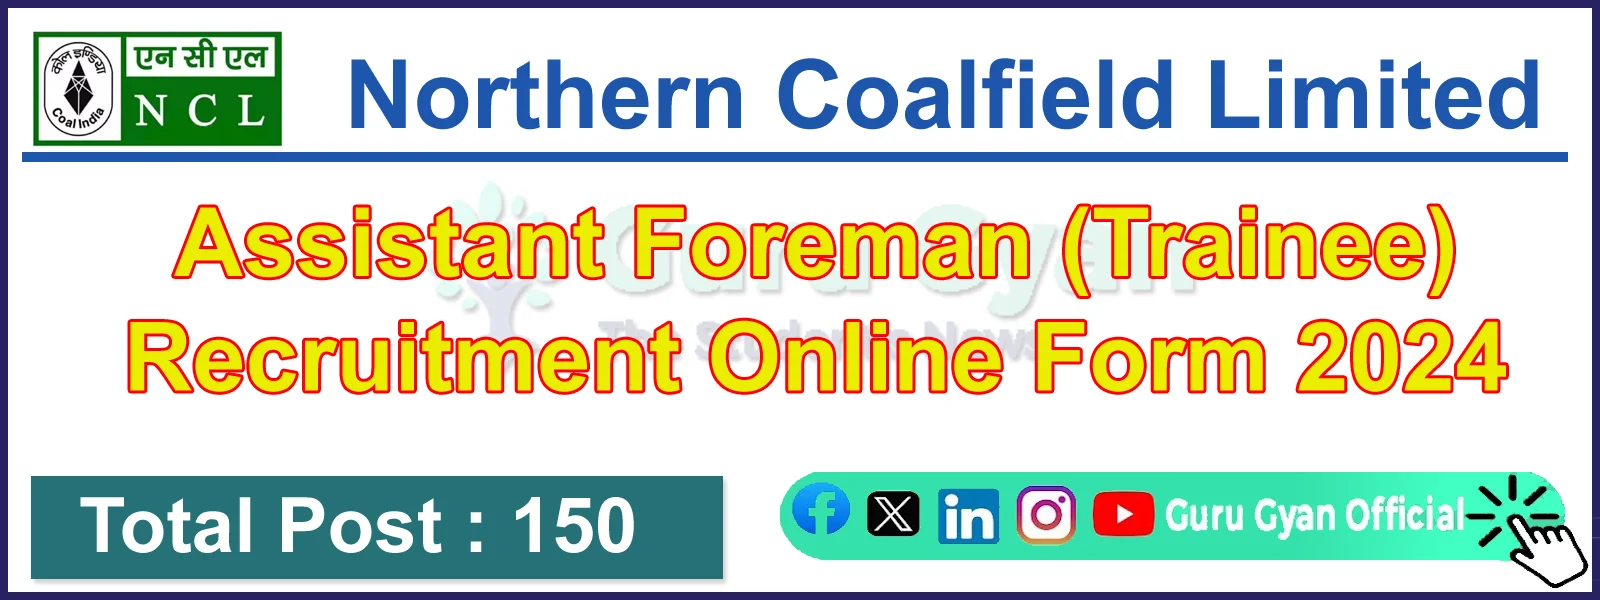 NCL CIL Assistant Foreman Online Form 2024